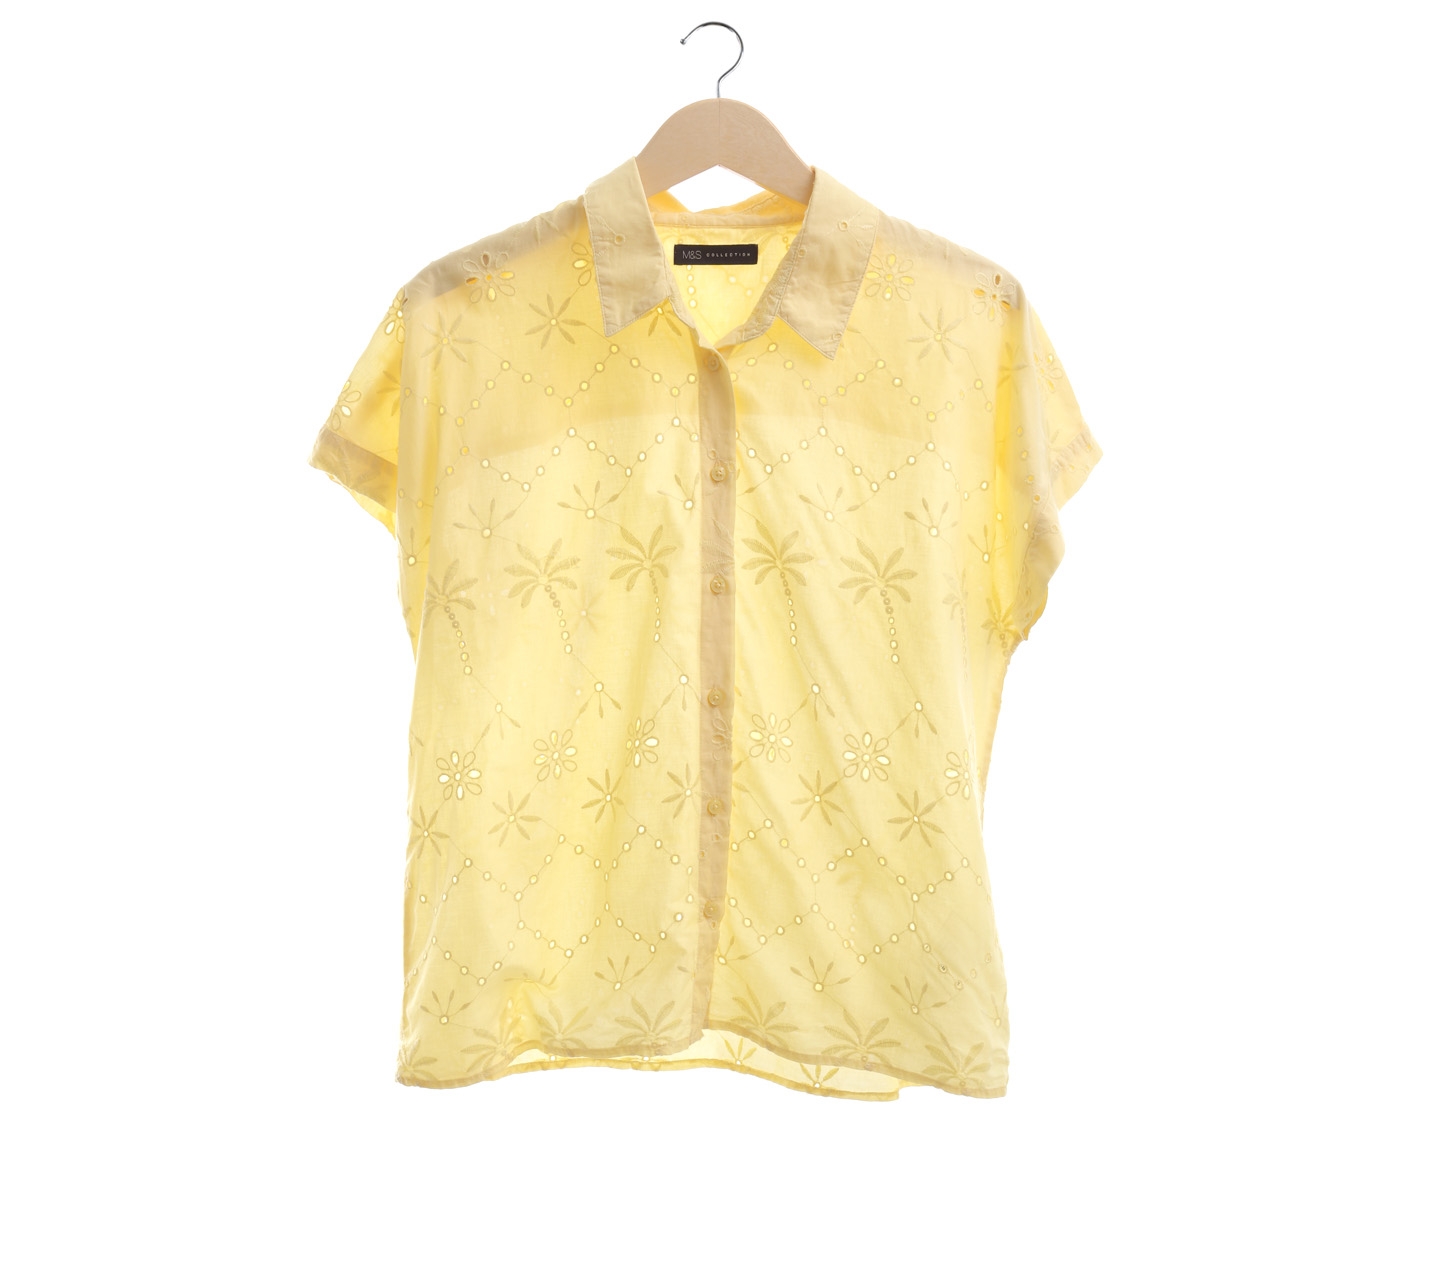 Marks & Spencer Yellow Shirt